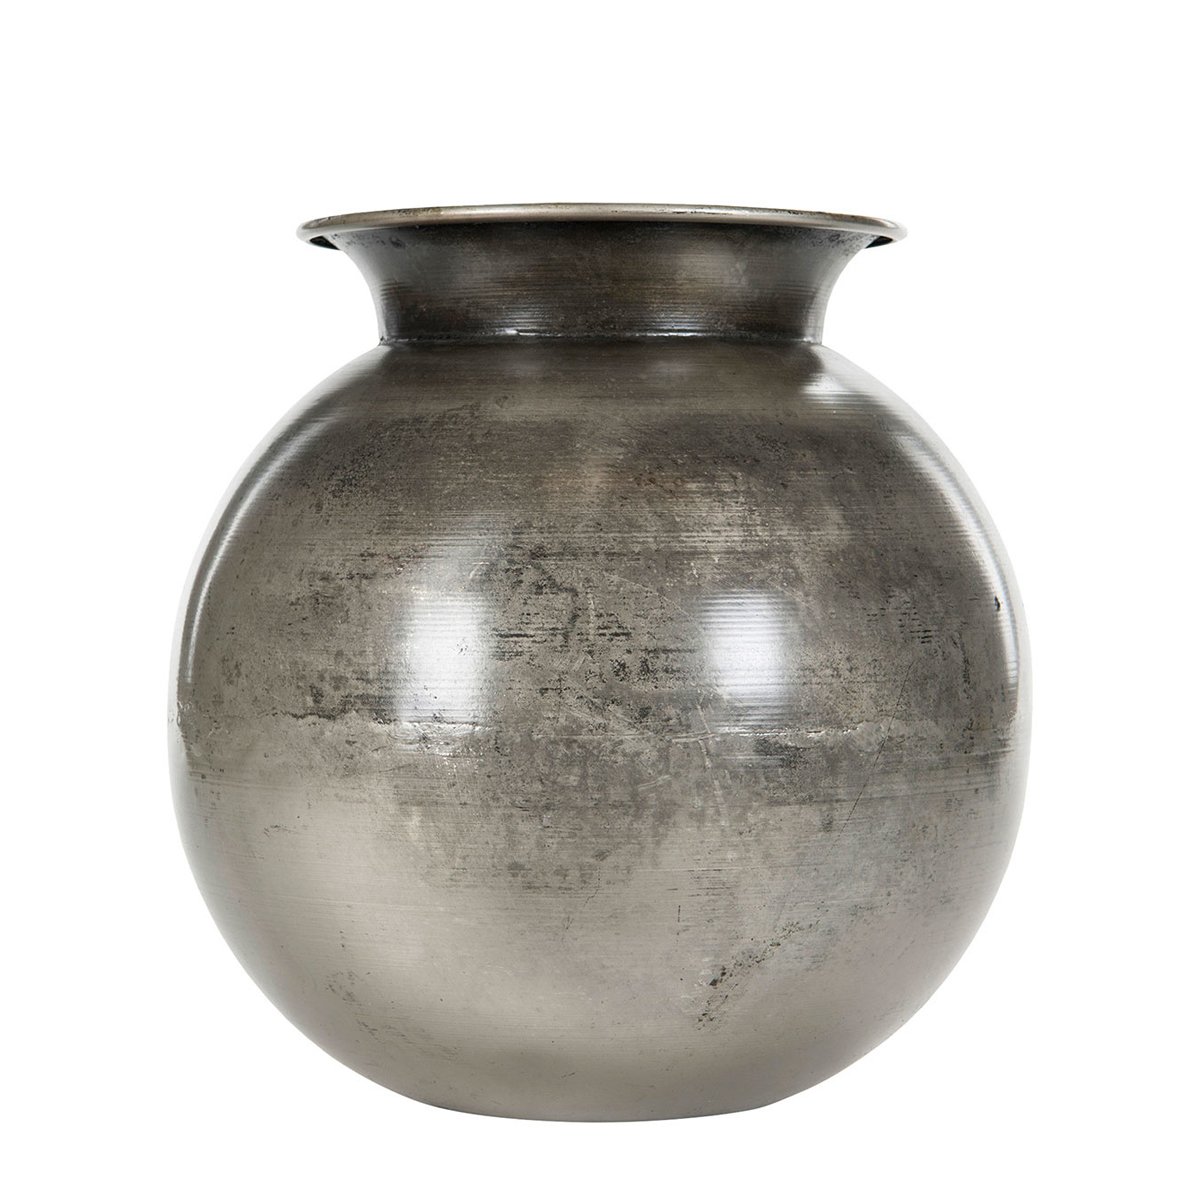 Stor rund vase med tinlook
Ø: 26 cm H: 26 cm